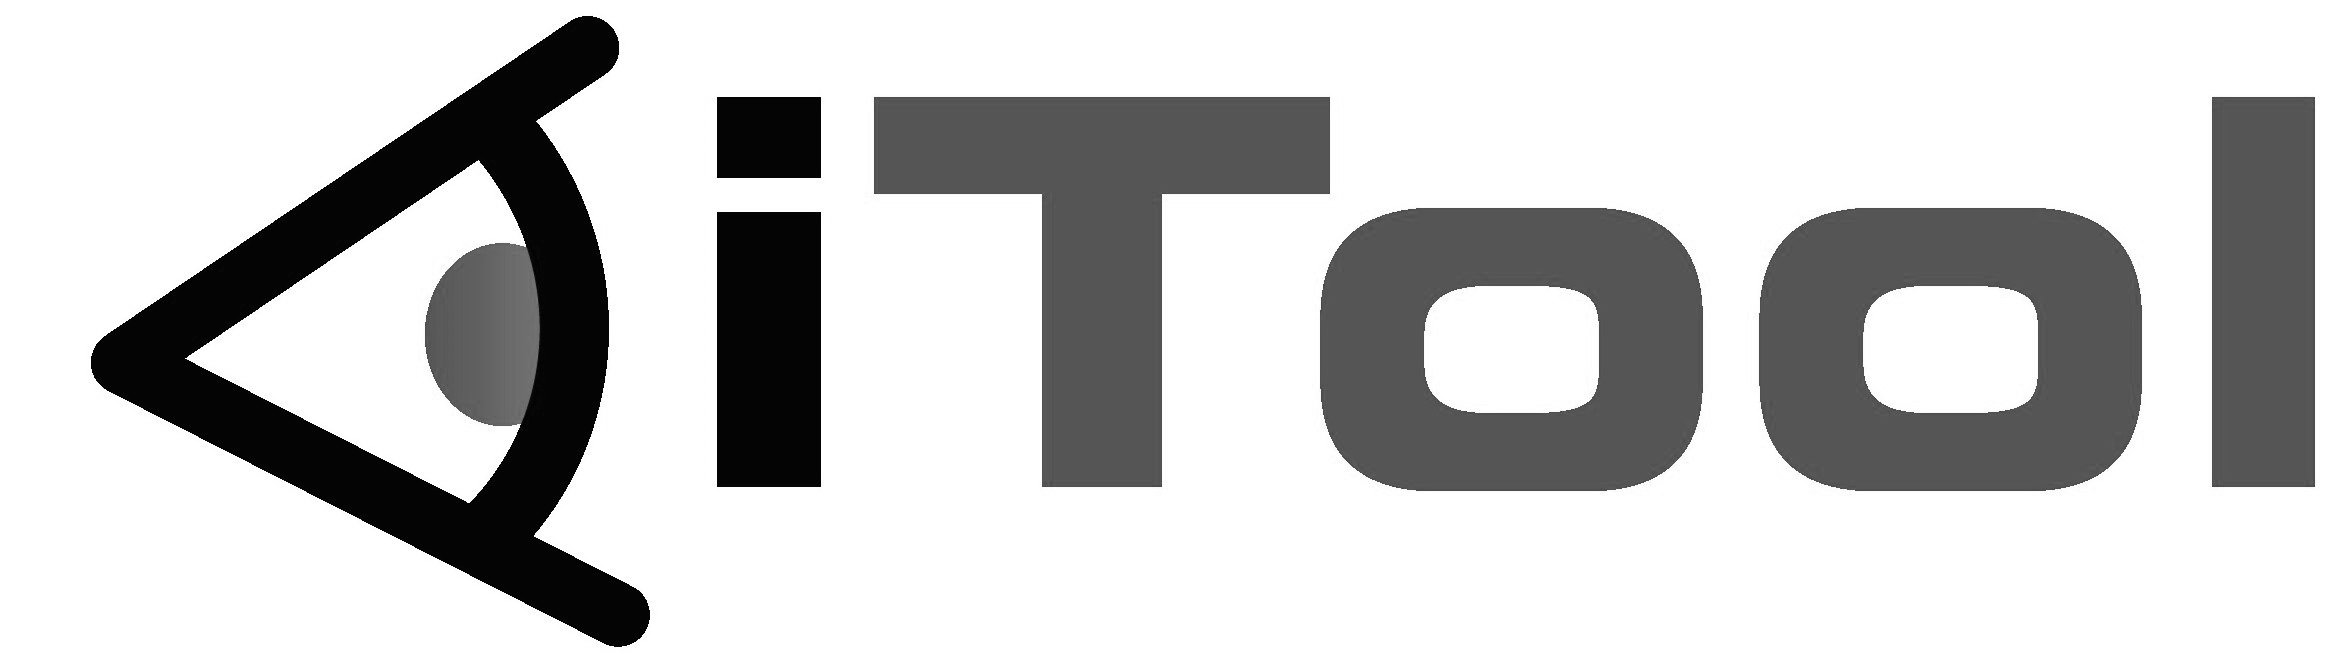 Trademark Logo ITOOL